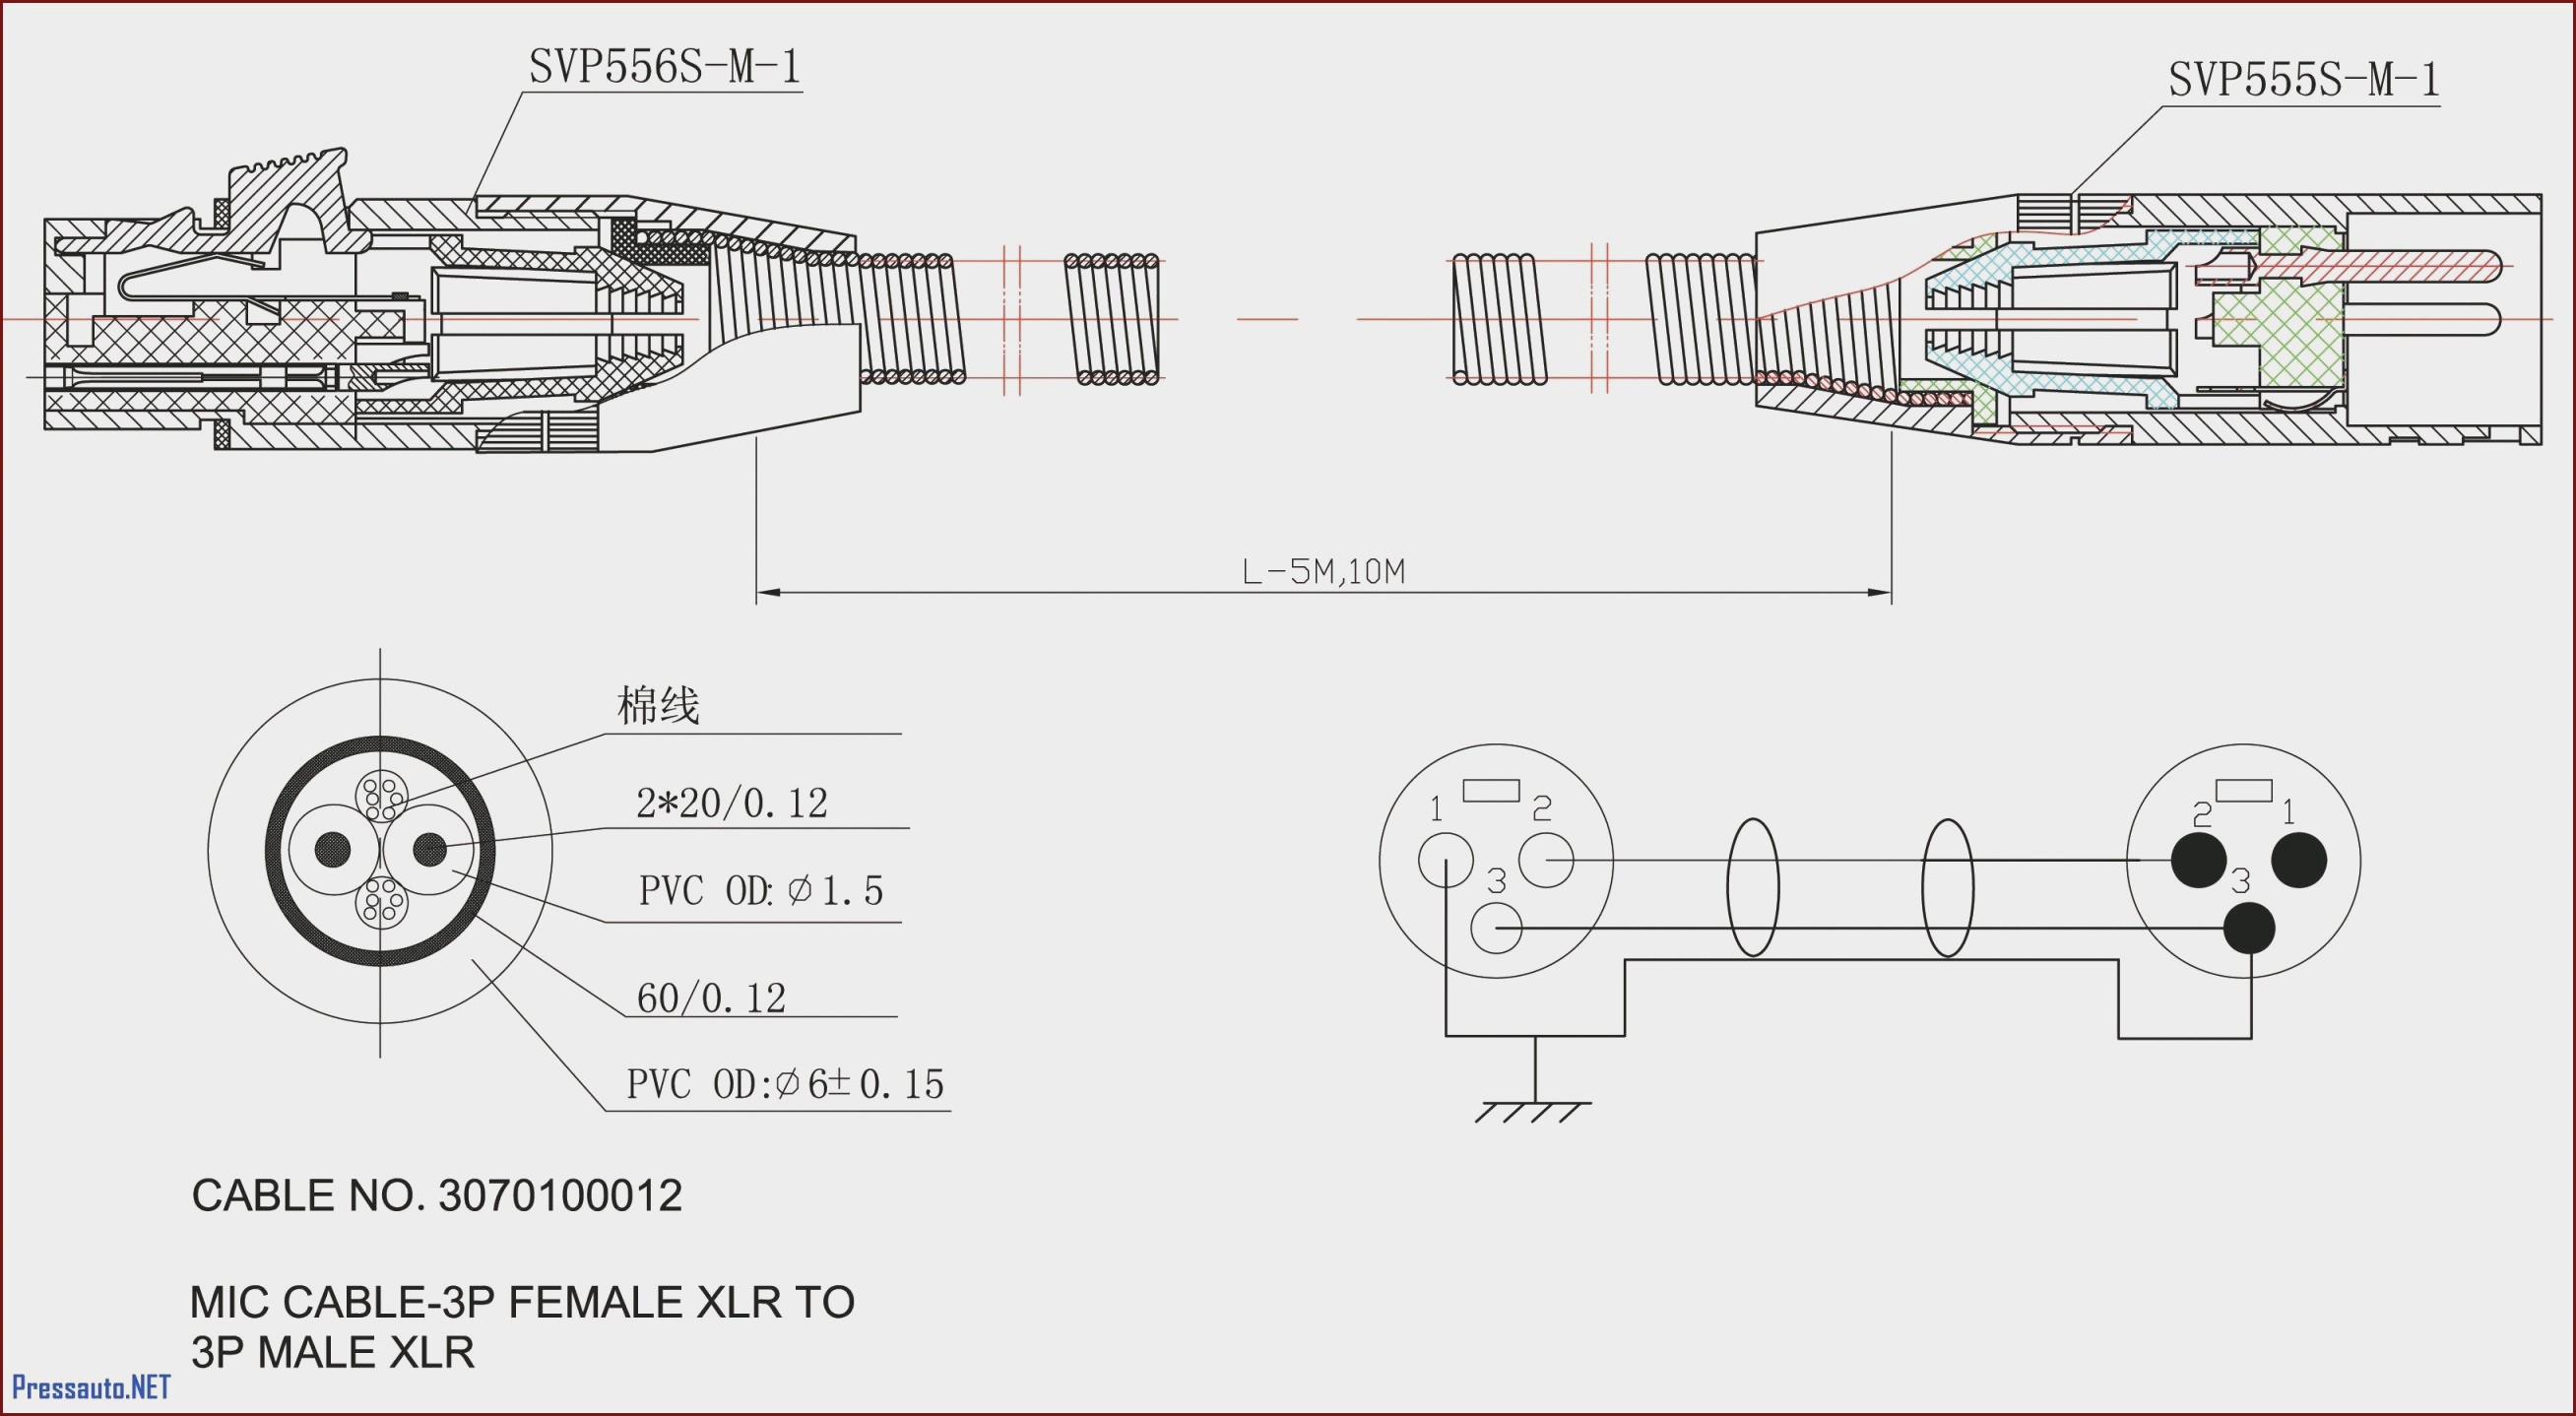 2001 Nissan Sentra Engine Diagram Gm 4 Pin Alternator Wiring Diagram at Manuals Library Of 2001 Nissan Sentra Engine Diagram